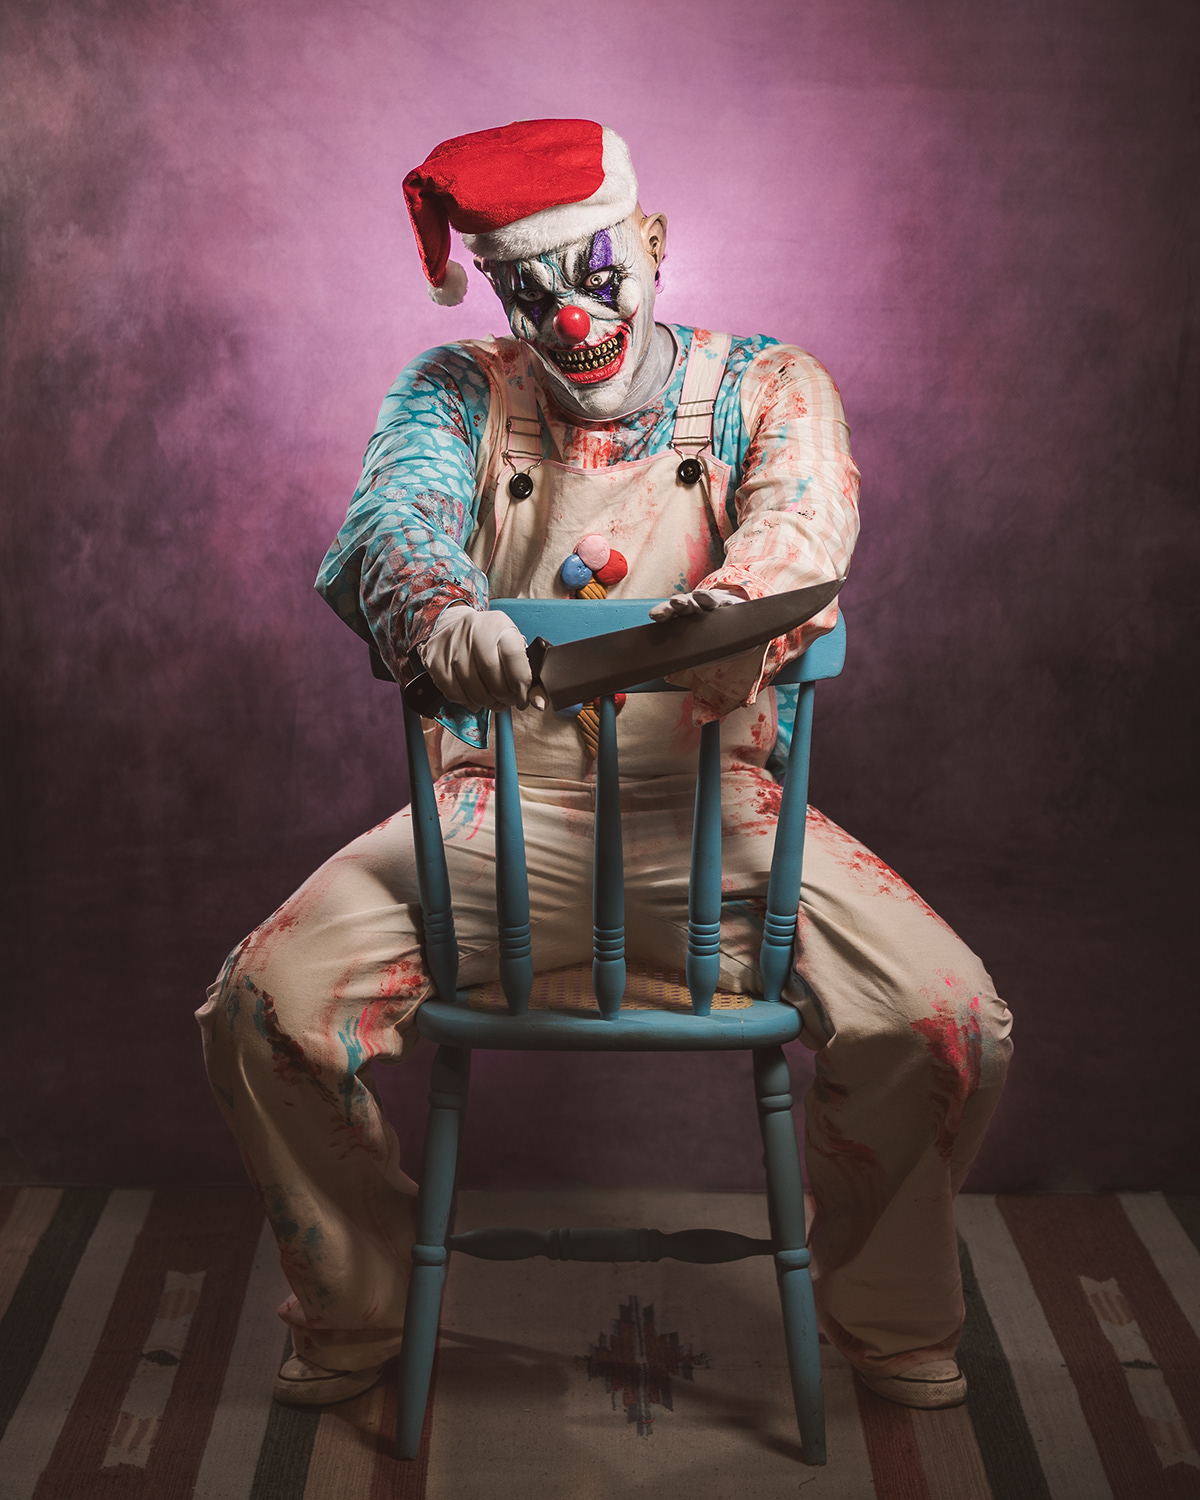 horror photography Halloween evil clown pennywise horror freak show american horror story ahs clown creepy